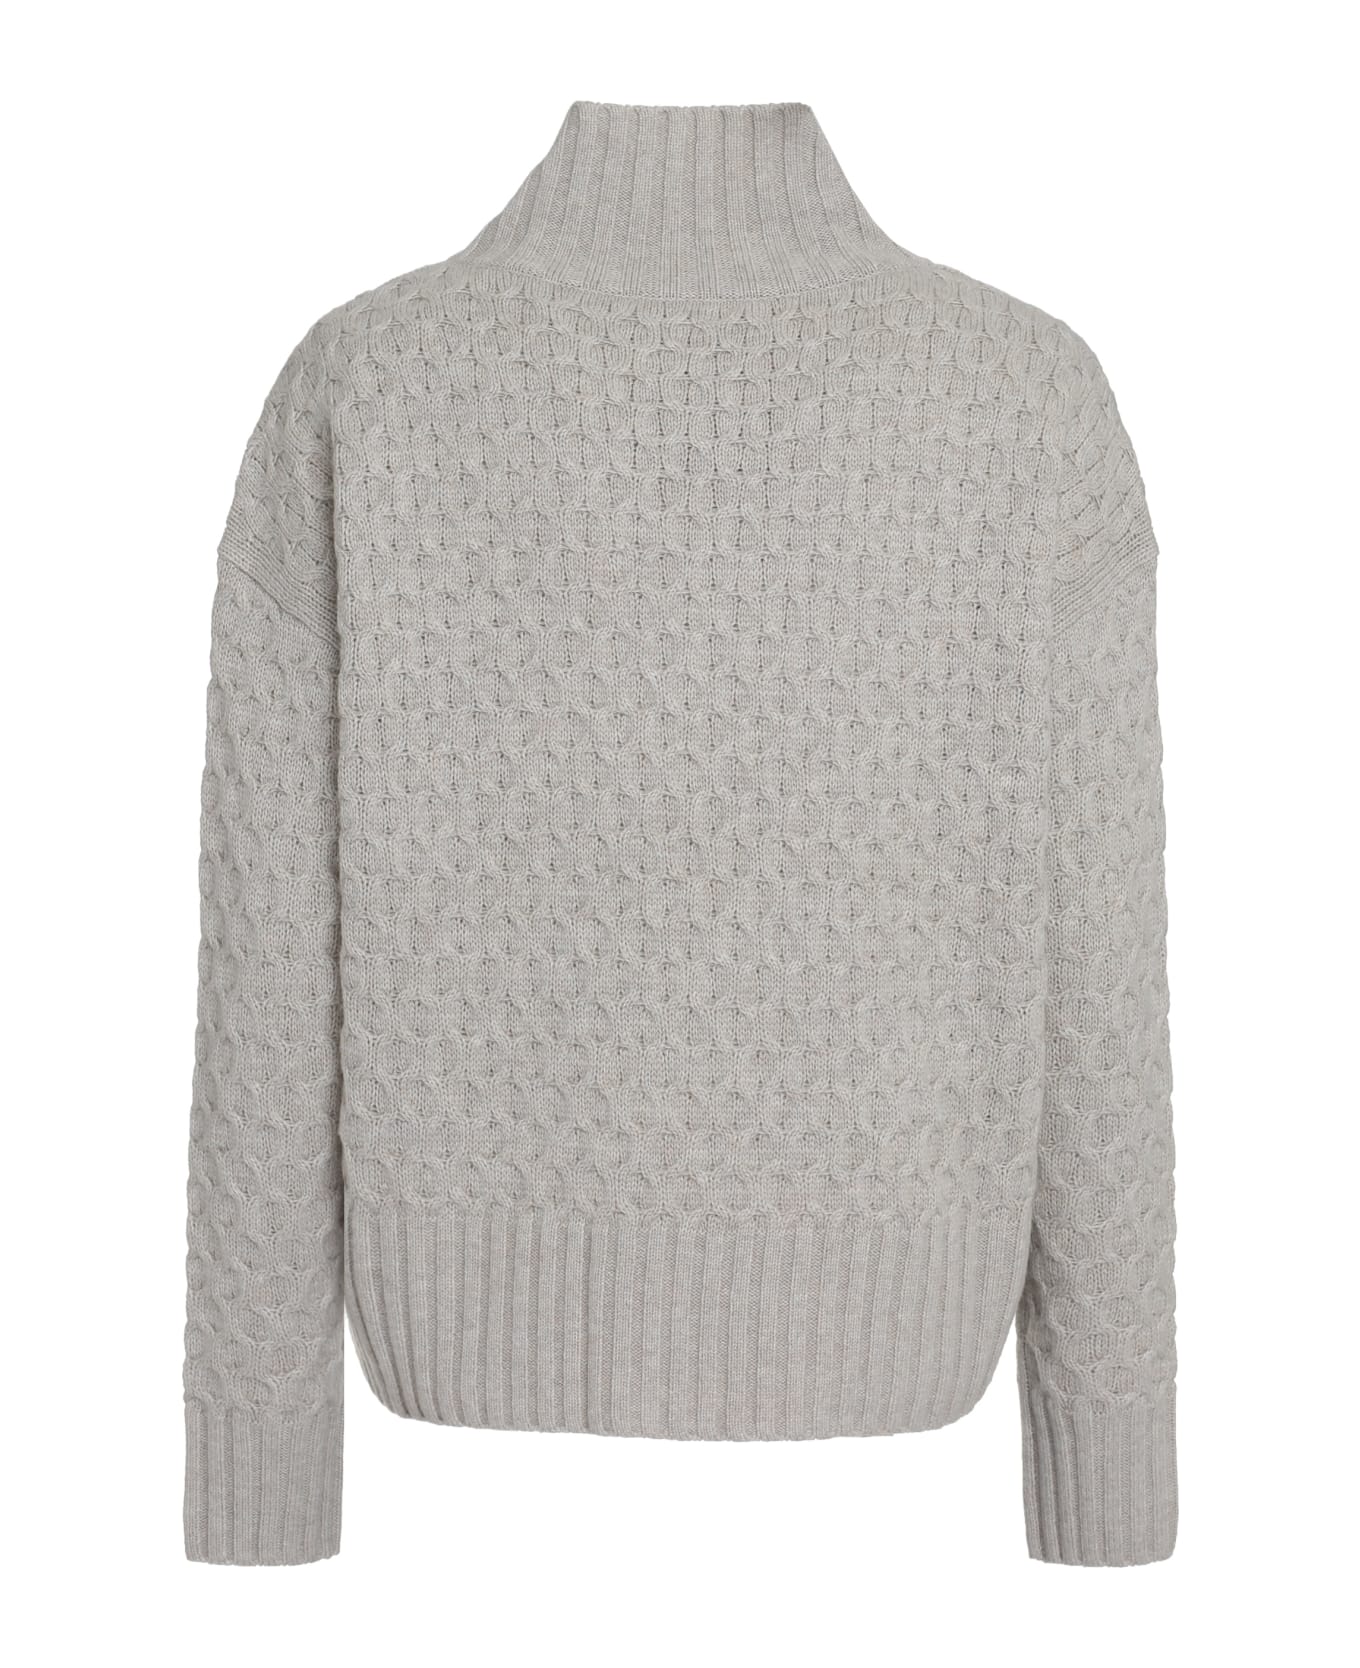 Max Mara Studio Valdese Wool And Cashmere Sweater - Grey ニットウェア